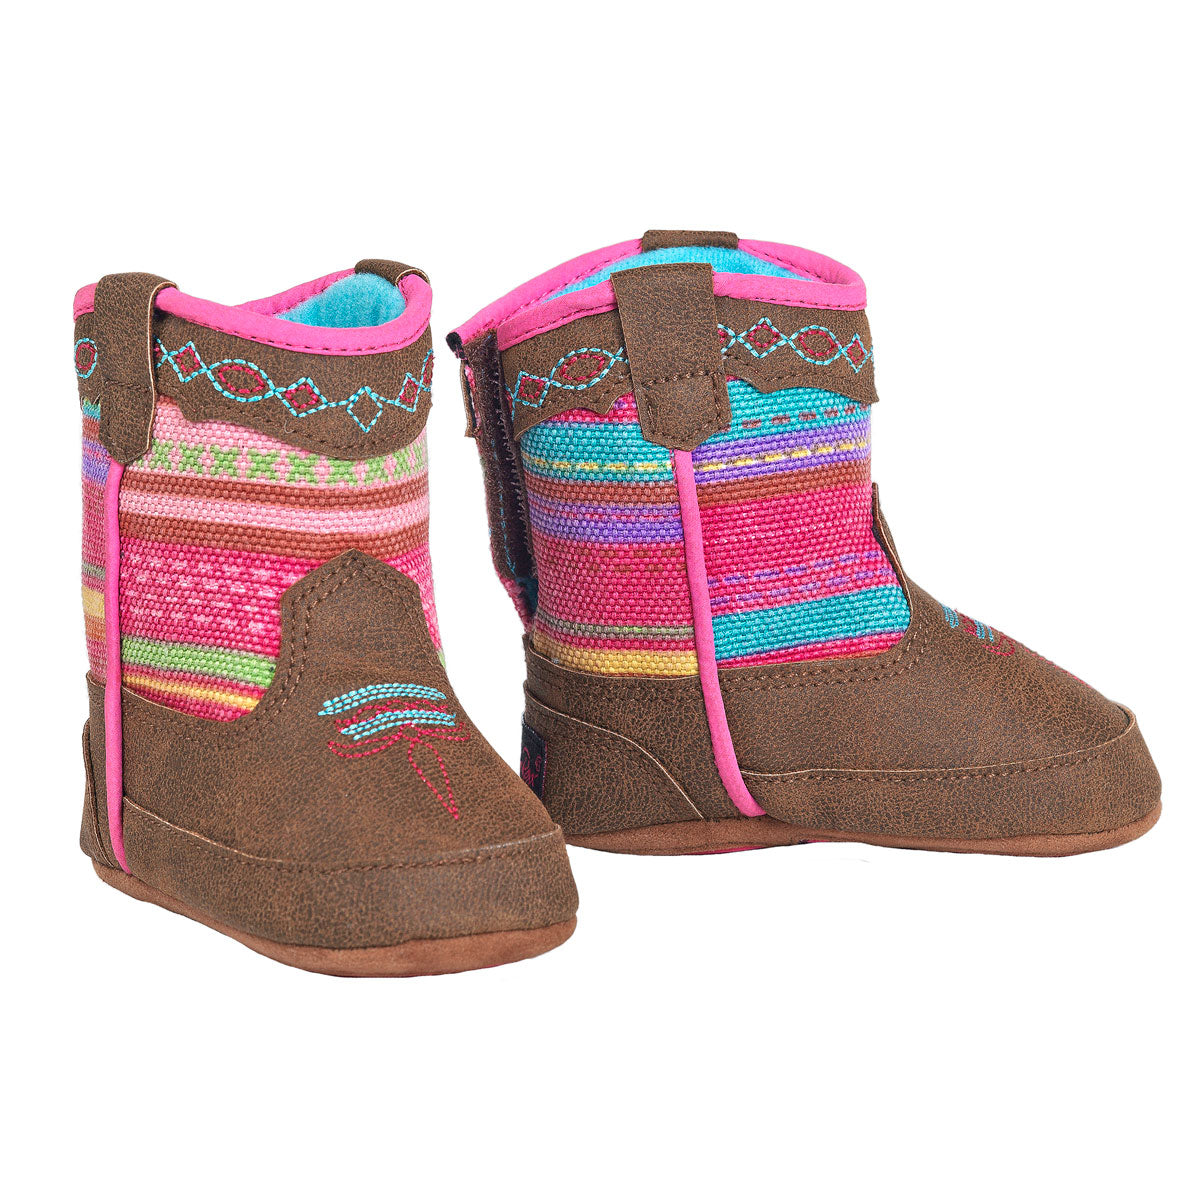 Blazin Roxx Camilla Baby Bucker Boots with Velcro Access - Brown with Serape Print Top